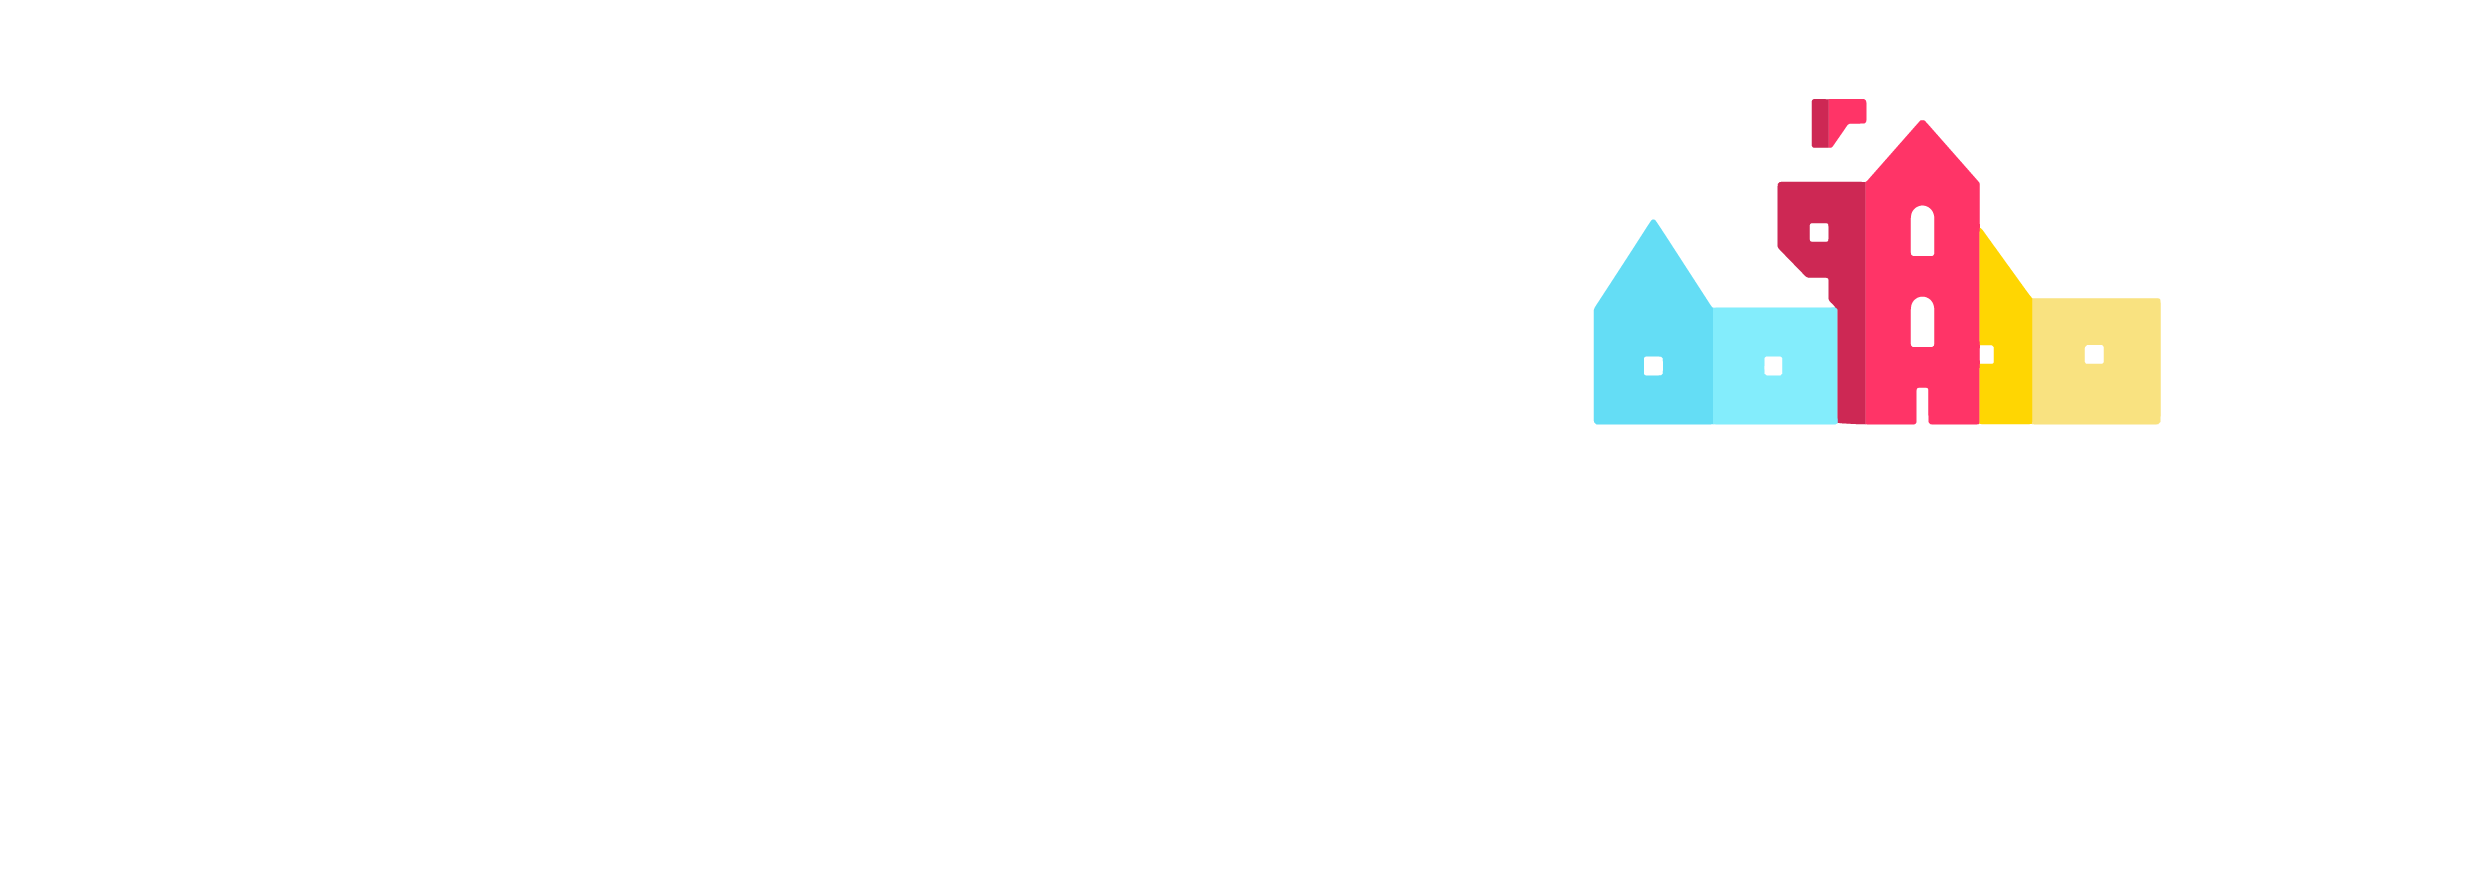 educate the barrios logo